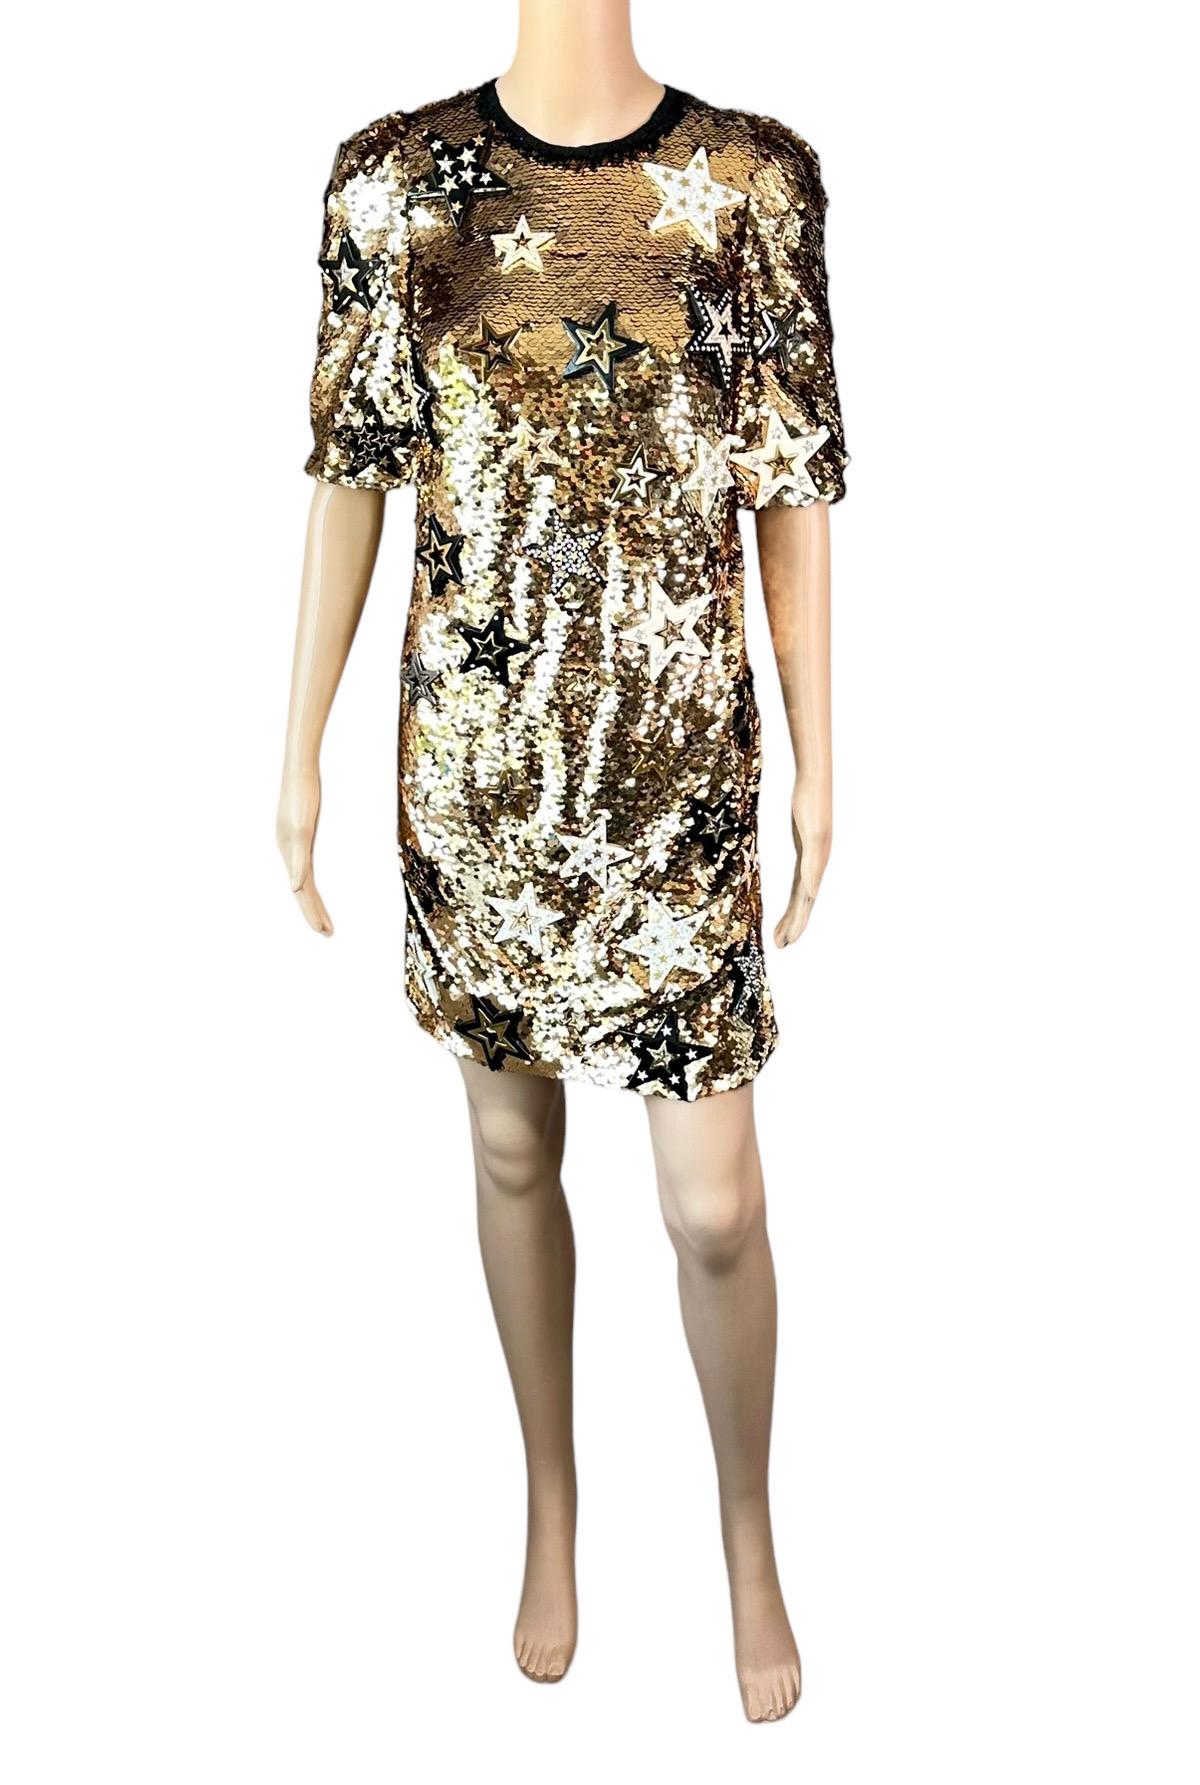 Dolce & Gabbana F/W 2011 Runway Unworn Embellished Star Sequined Gold Mini Dress For Sale 5